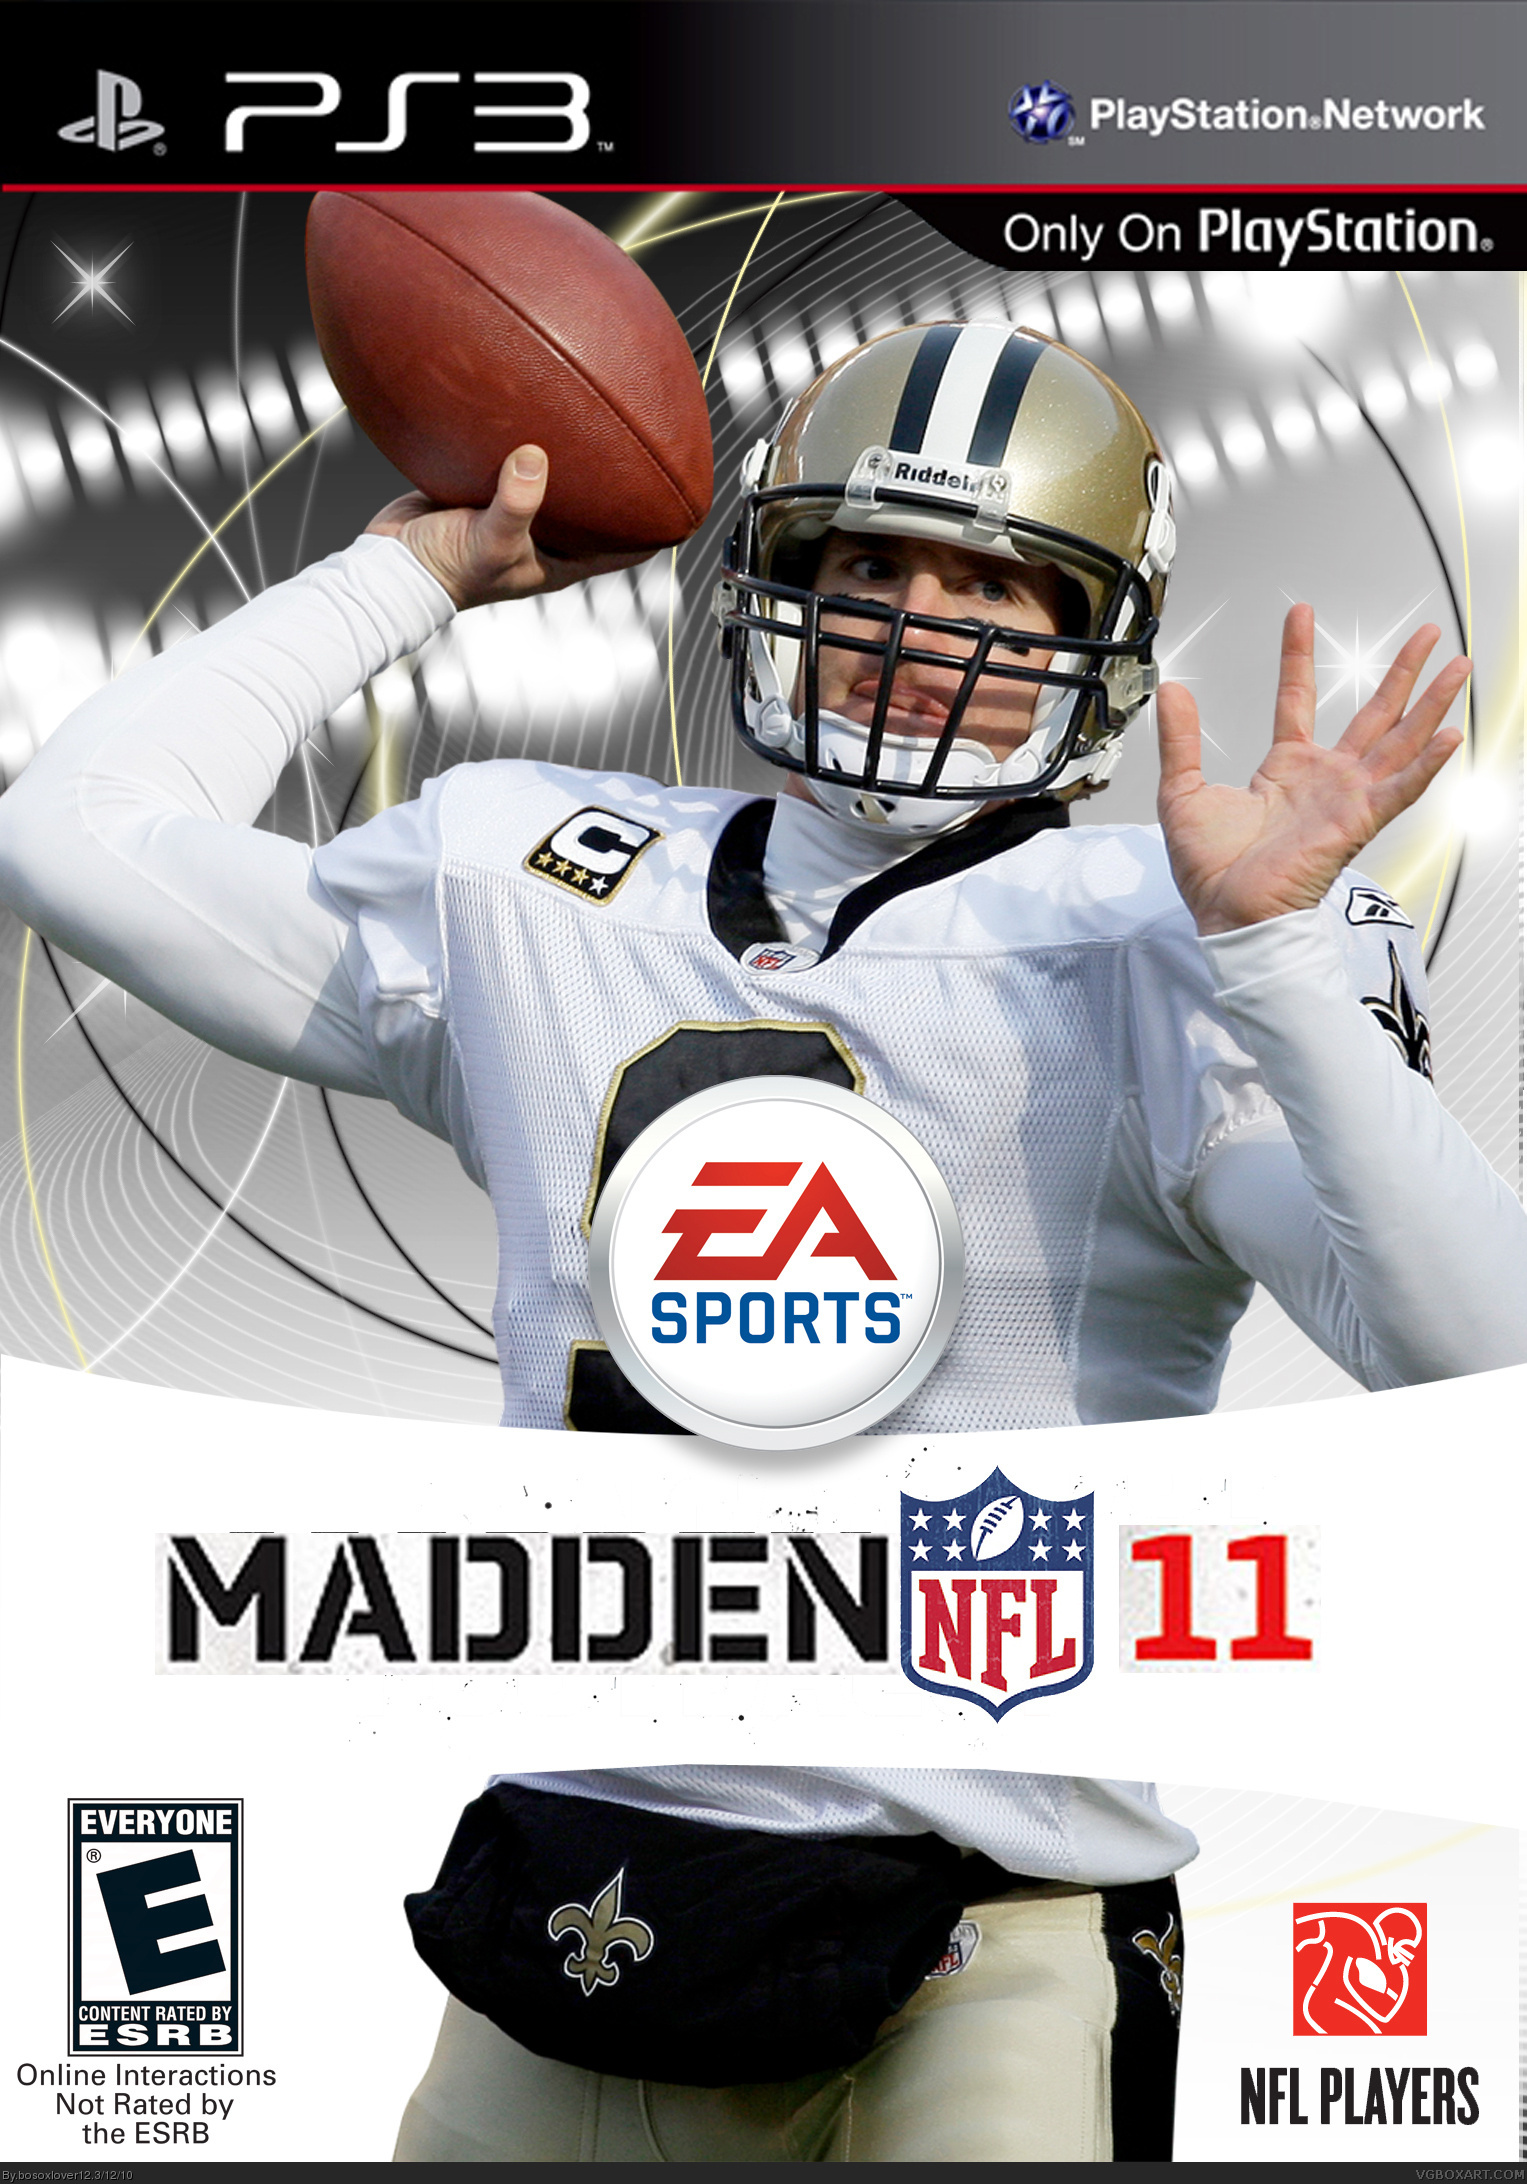 Madden NFL 11 box cover